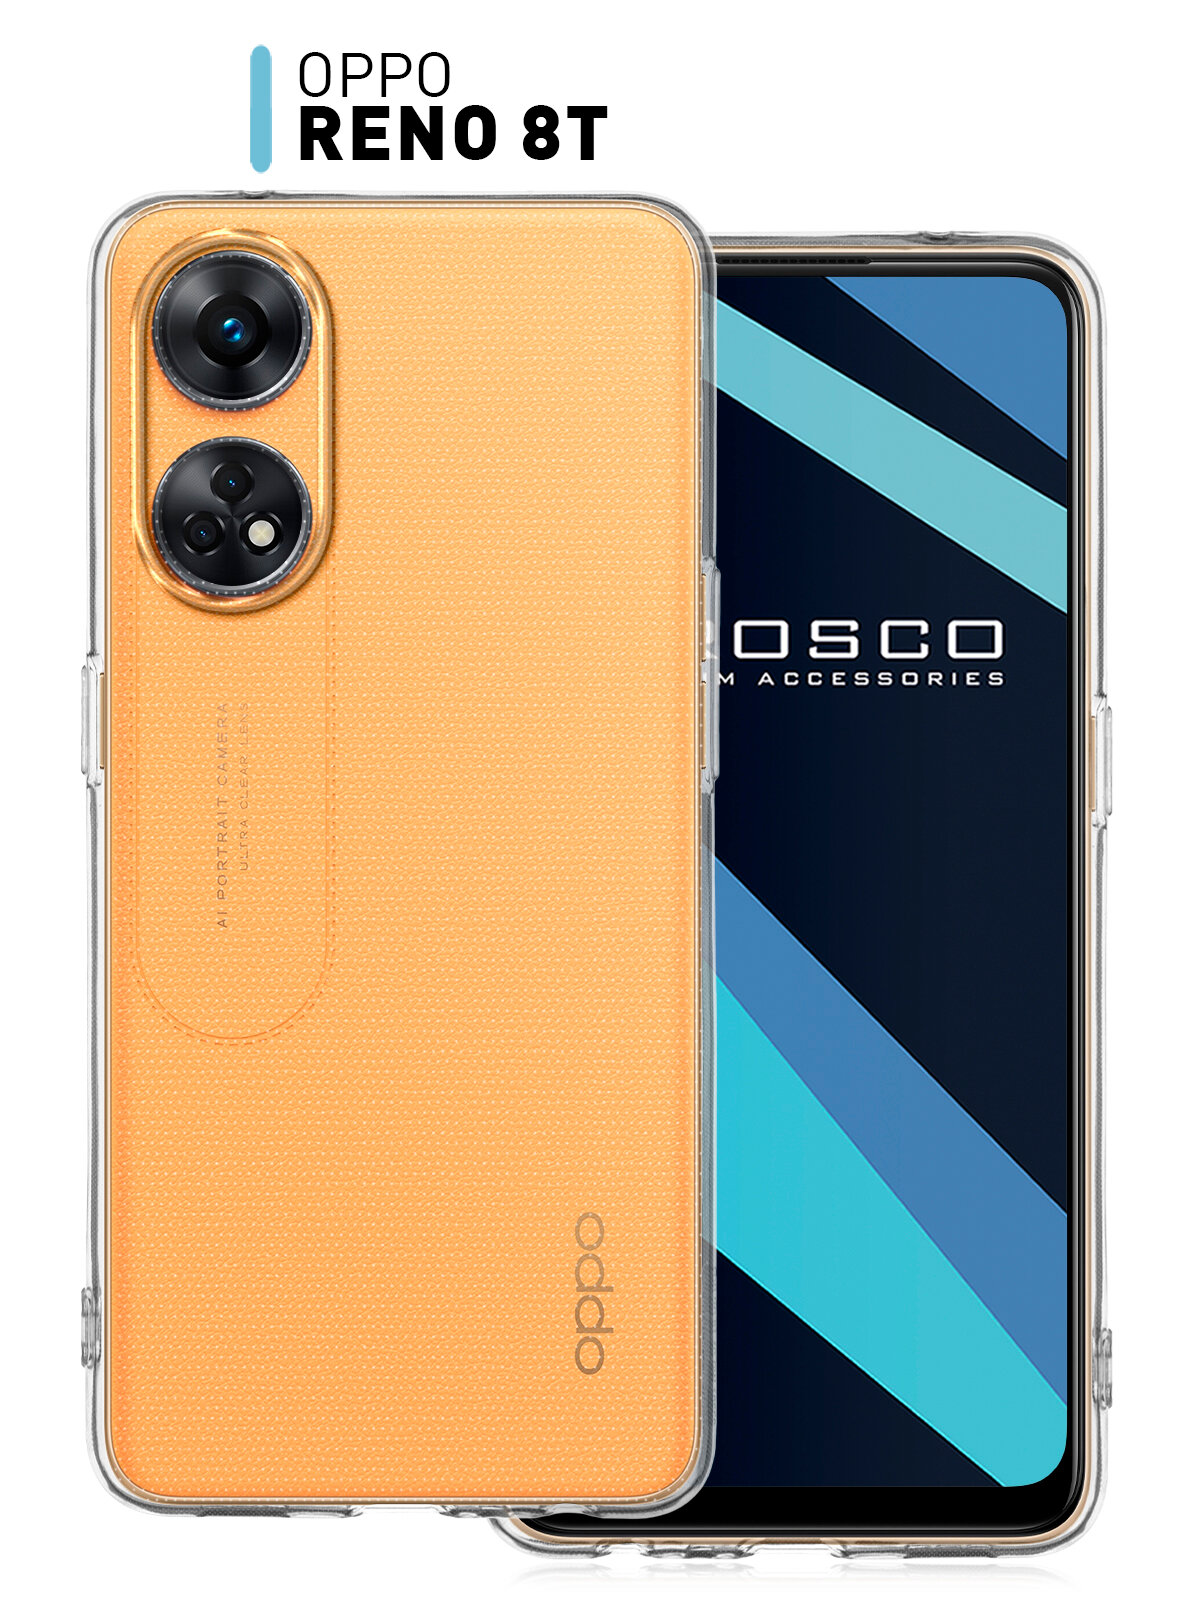 Силиконовый чехол для Oppo Reno 8T 4G (Оппо Рено 8Т, Oppo Reno8 T) накладка с защитой модуля камер, гибкий прозрачный ROSCO